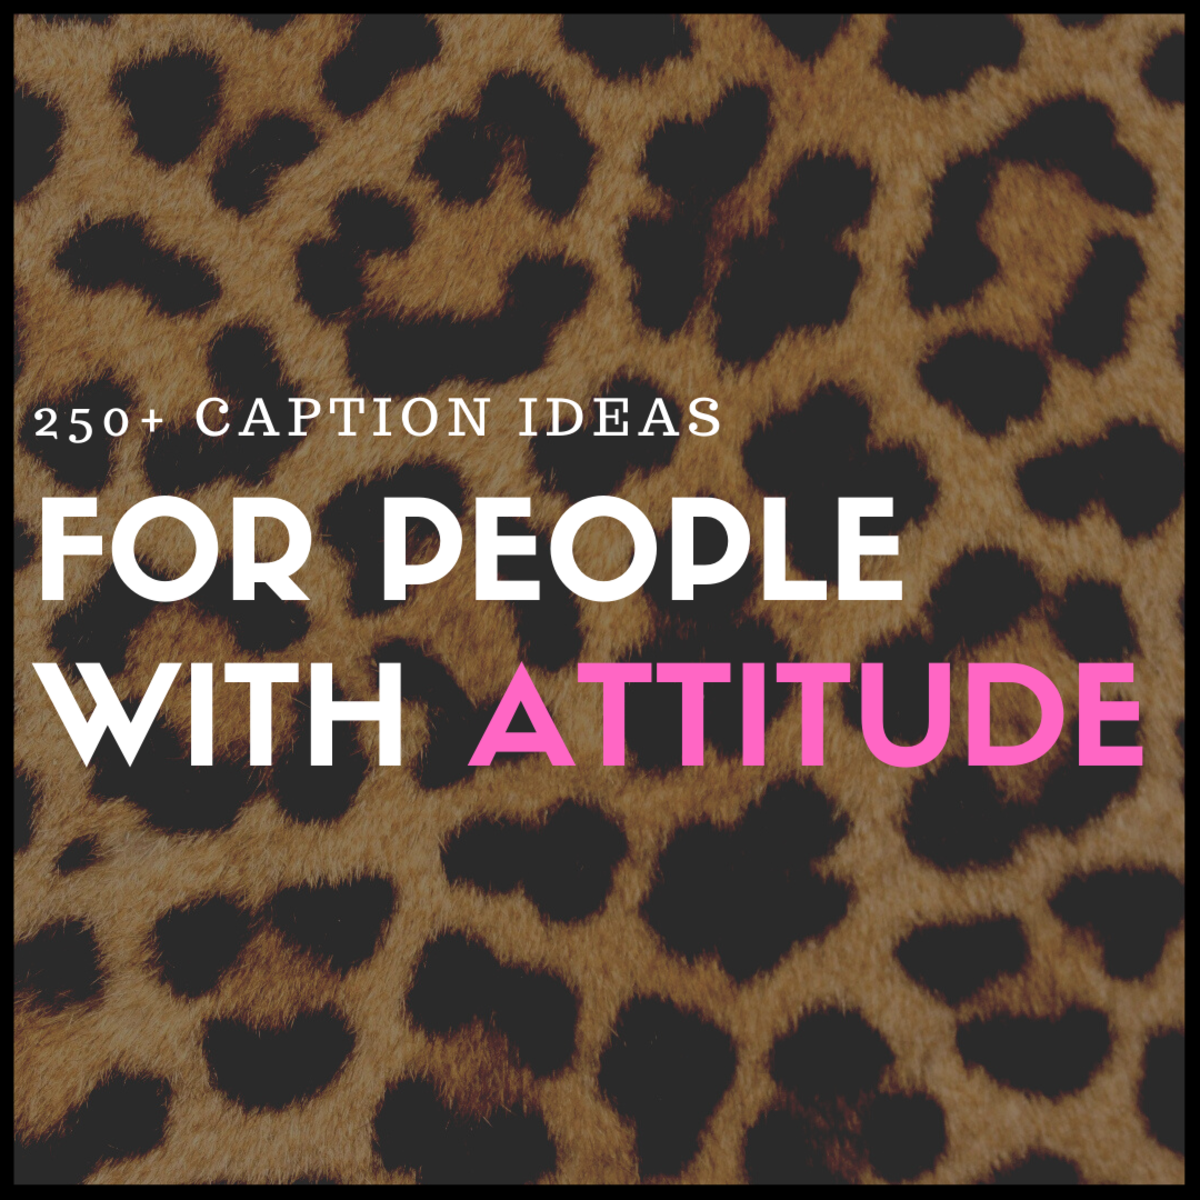 250+ Attitude Quotes and Caption Ideas - TurboFuture